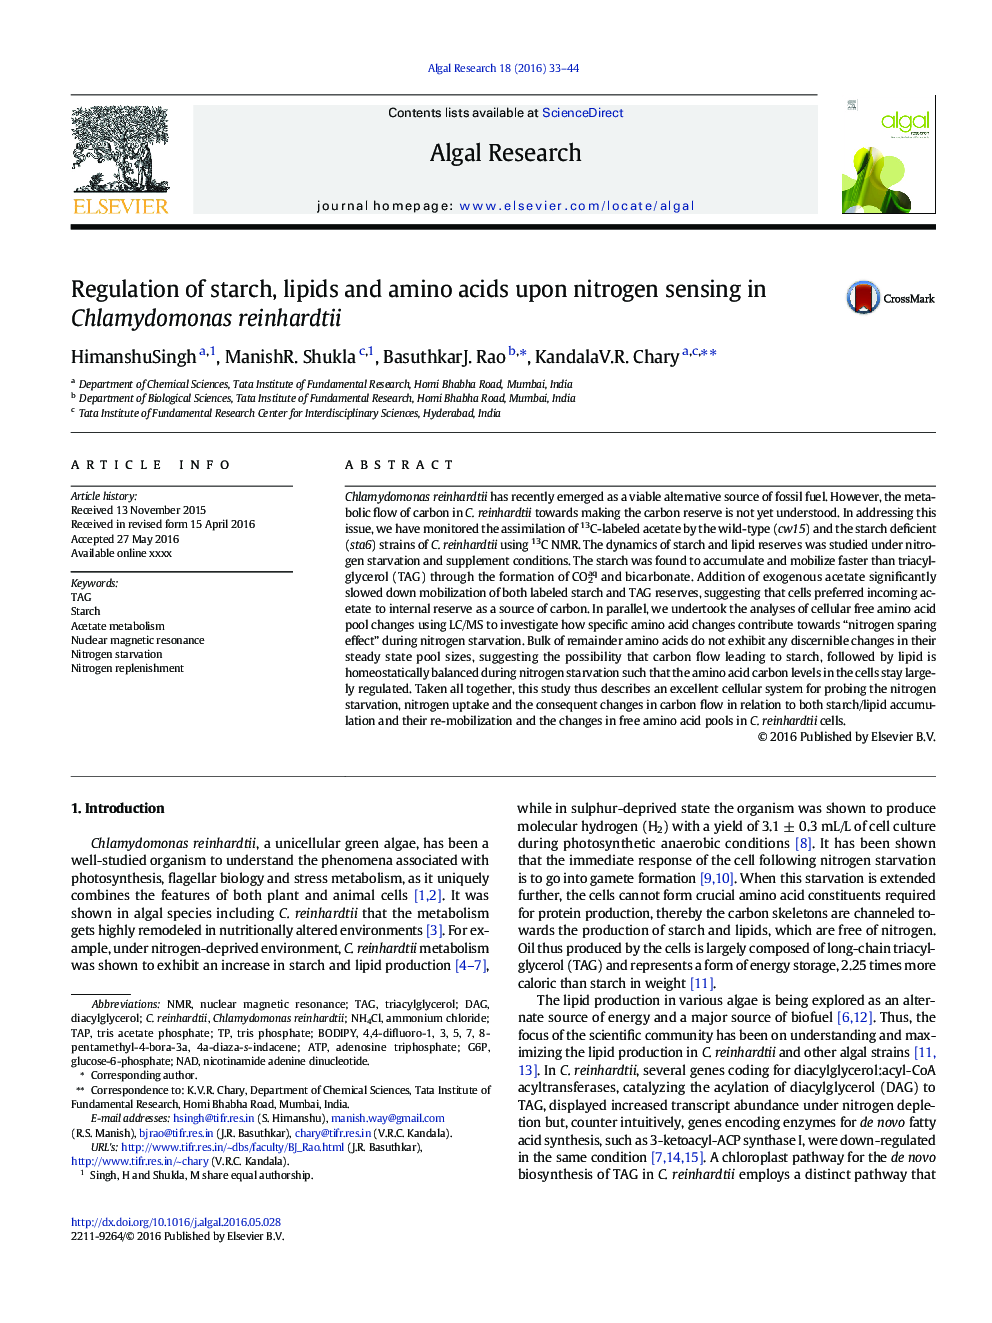 Regulation of starch, lipids and amino acids upon nitrogen sensing in Chlamydomonas reinhardtii